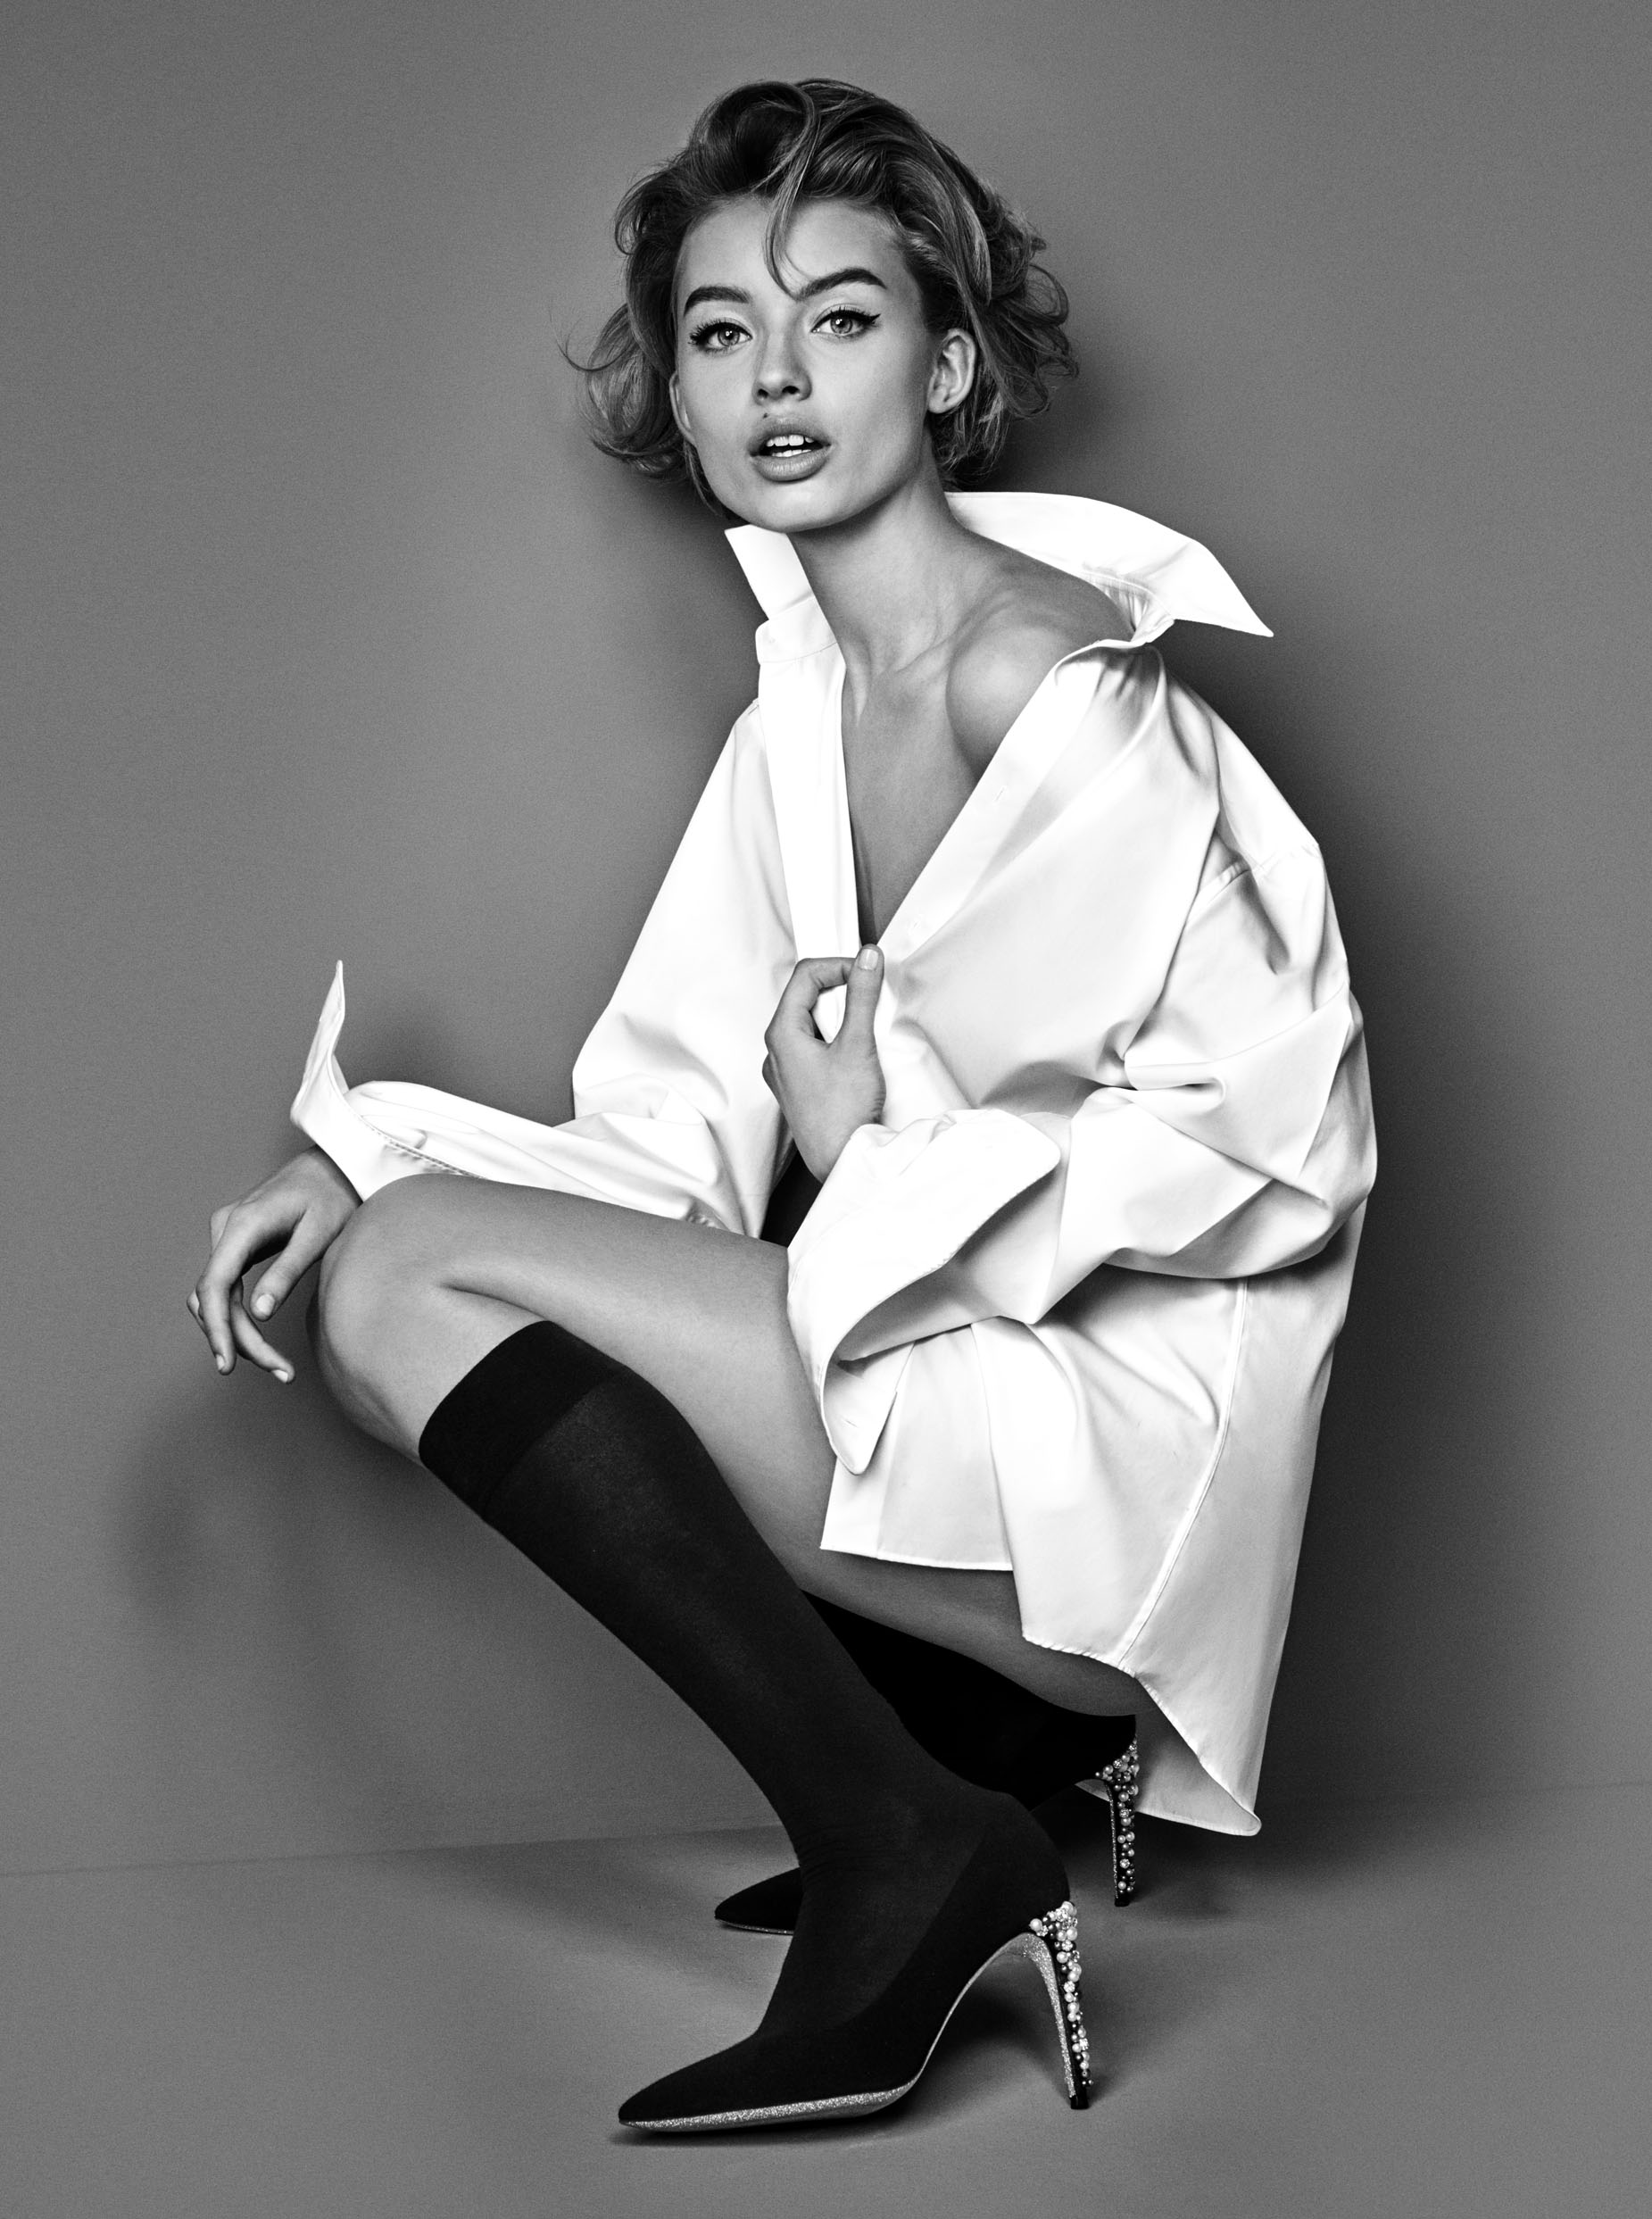 Giulia Maenza na nova campanha da marca em clique de Giampaolo Sgura e styling de Viviana Volpicella ©Cortesia